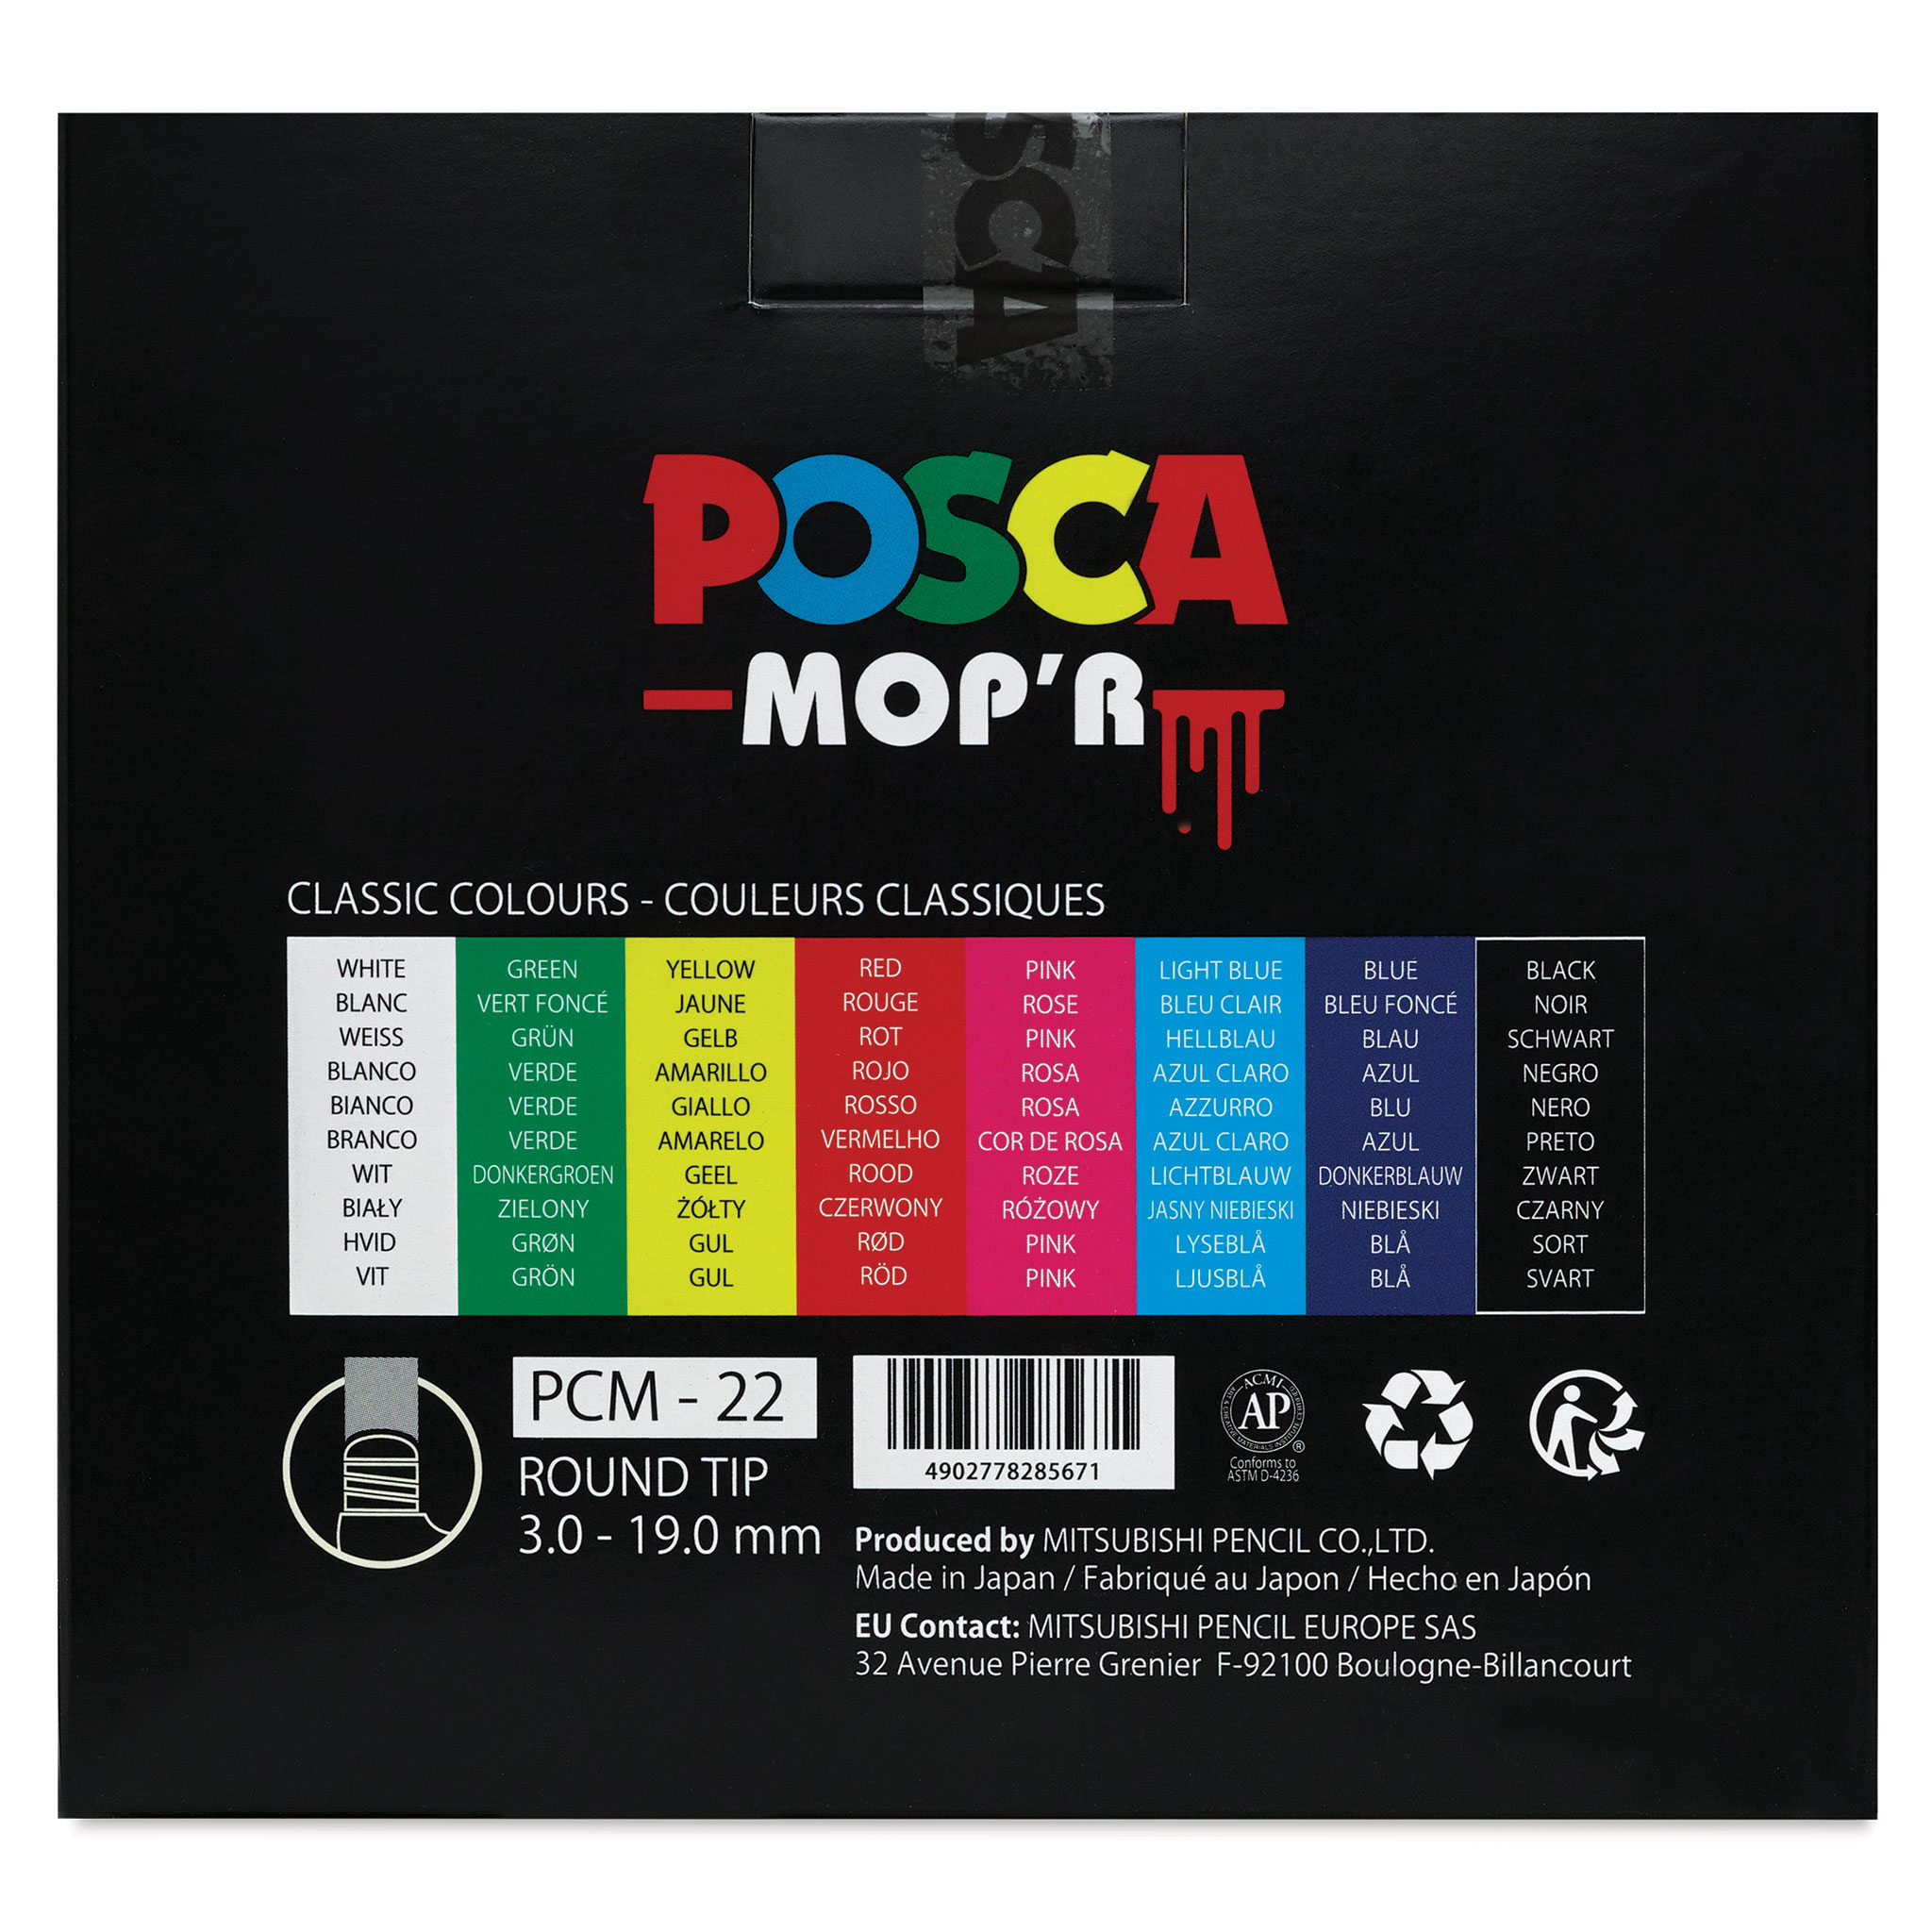 POSCA MOP'R: The Ultimate Graffiti Art Paint Marker for Creative